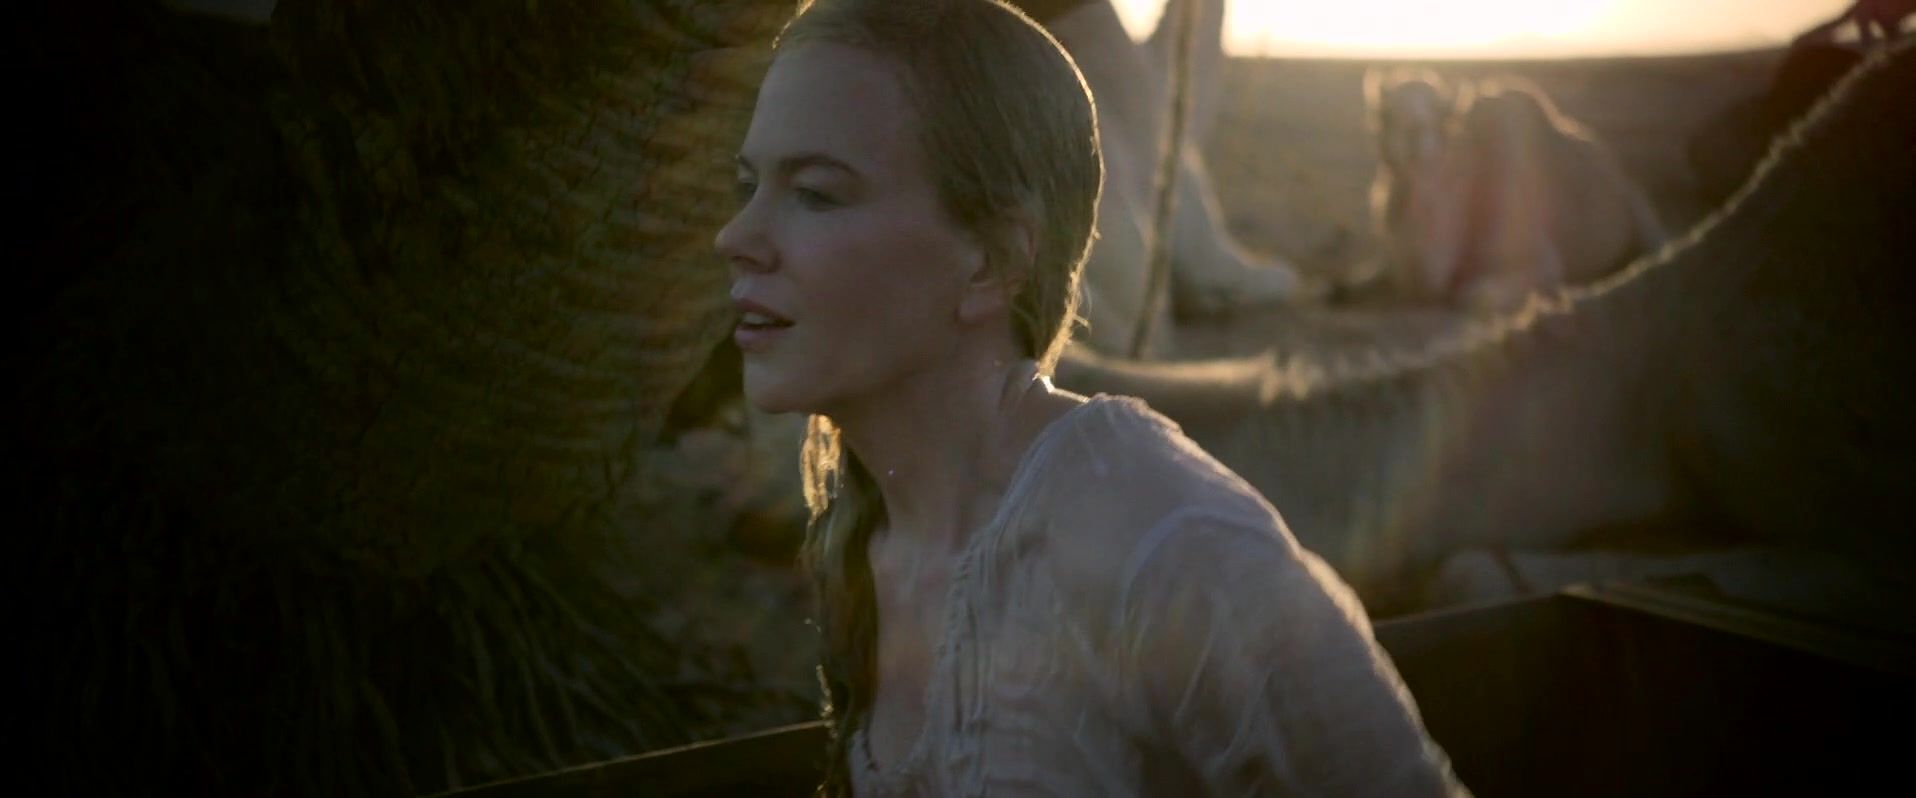 AdblockPlus Nicole Kidman nude - Queen of the Desert (2016) BigAndReady